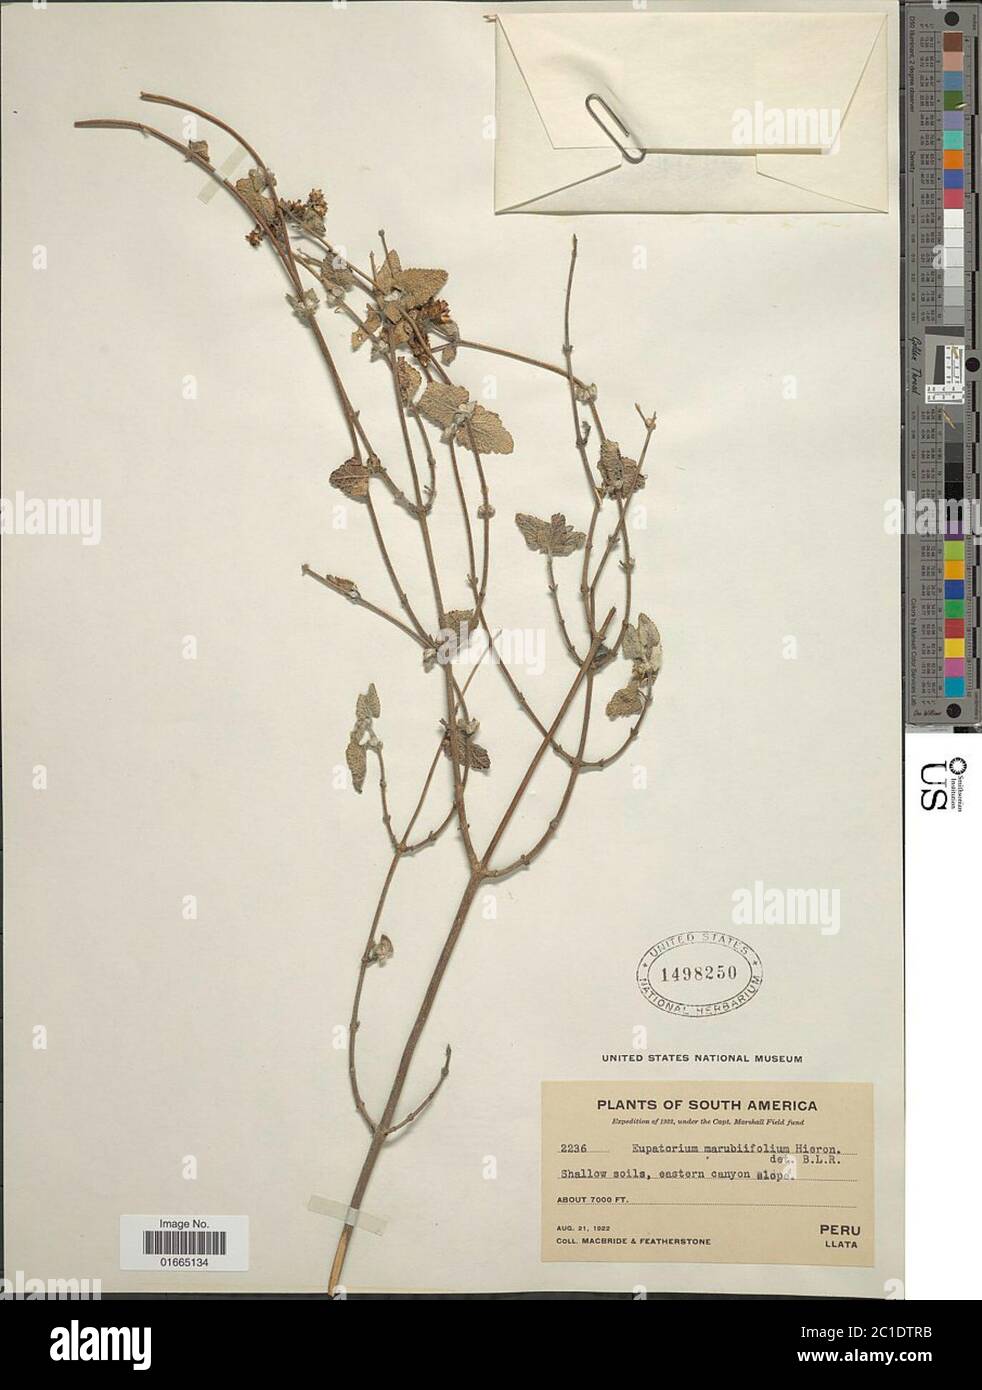 Cronquistianthus marrubiifolius Hieron RM King H Rob Cronquistianthus marrubiifolius Hieron RM King H Rob. Stock Photo